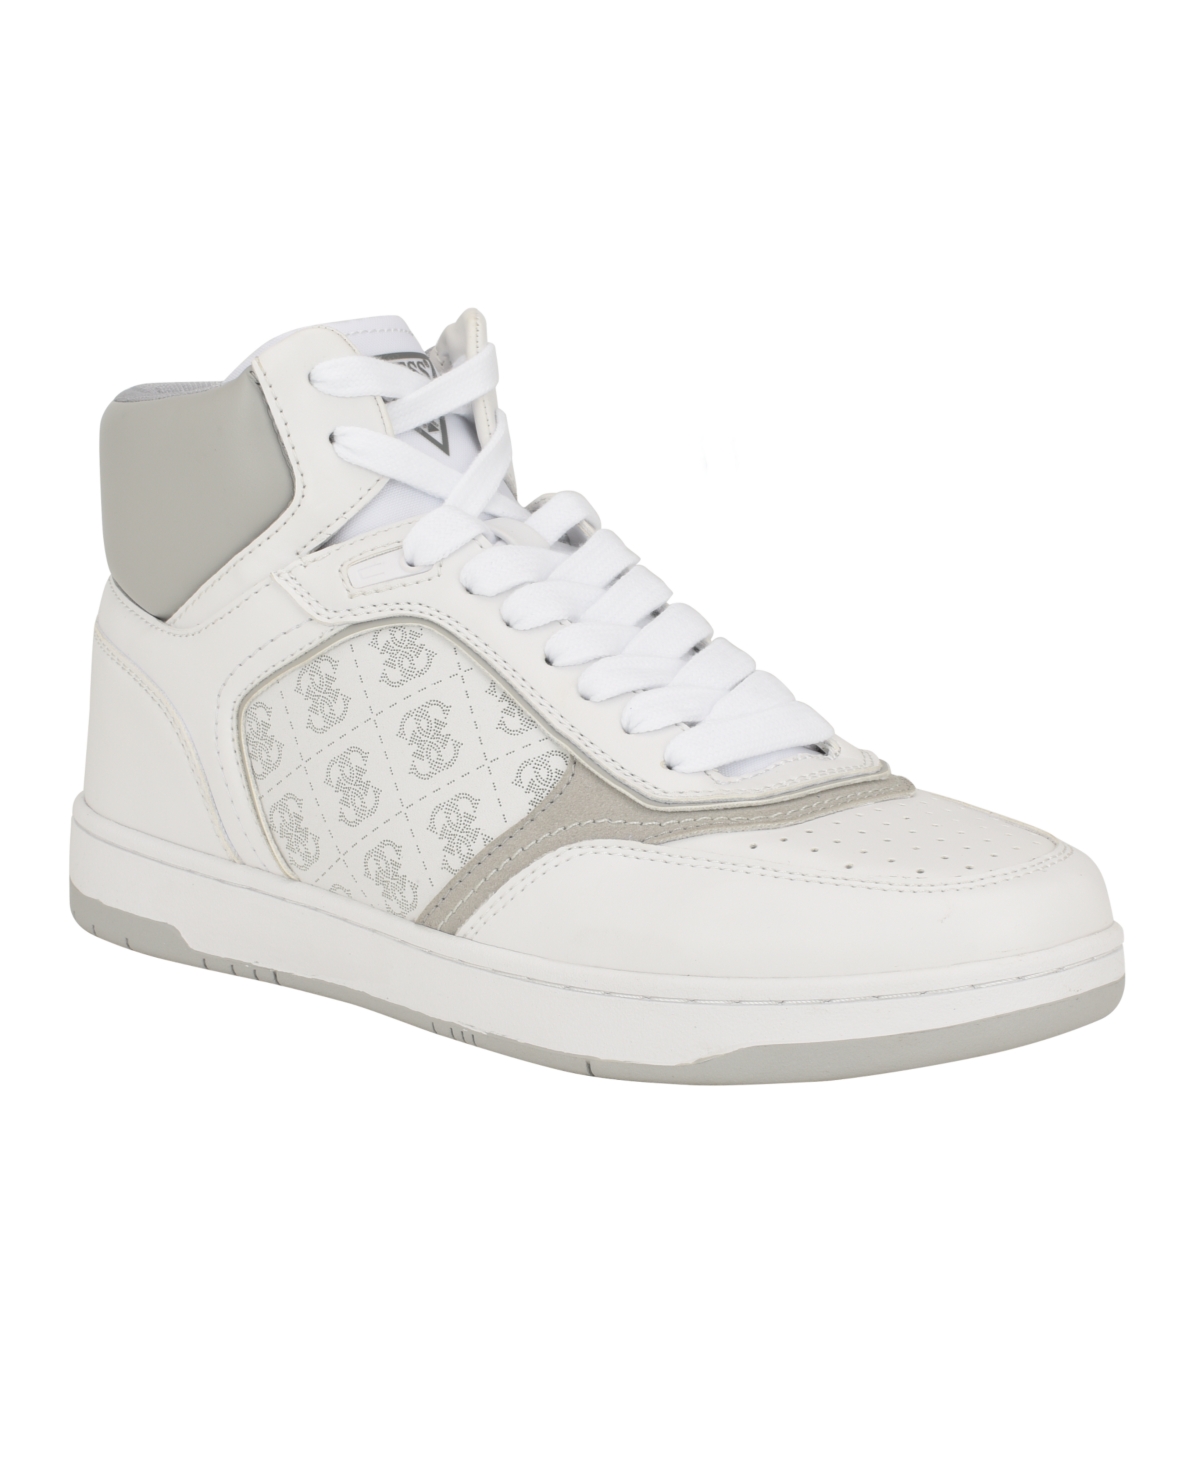 Men's Towen Branded High Top Fashion Sneakers - Light Gray, White Logo Multi